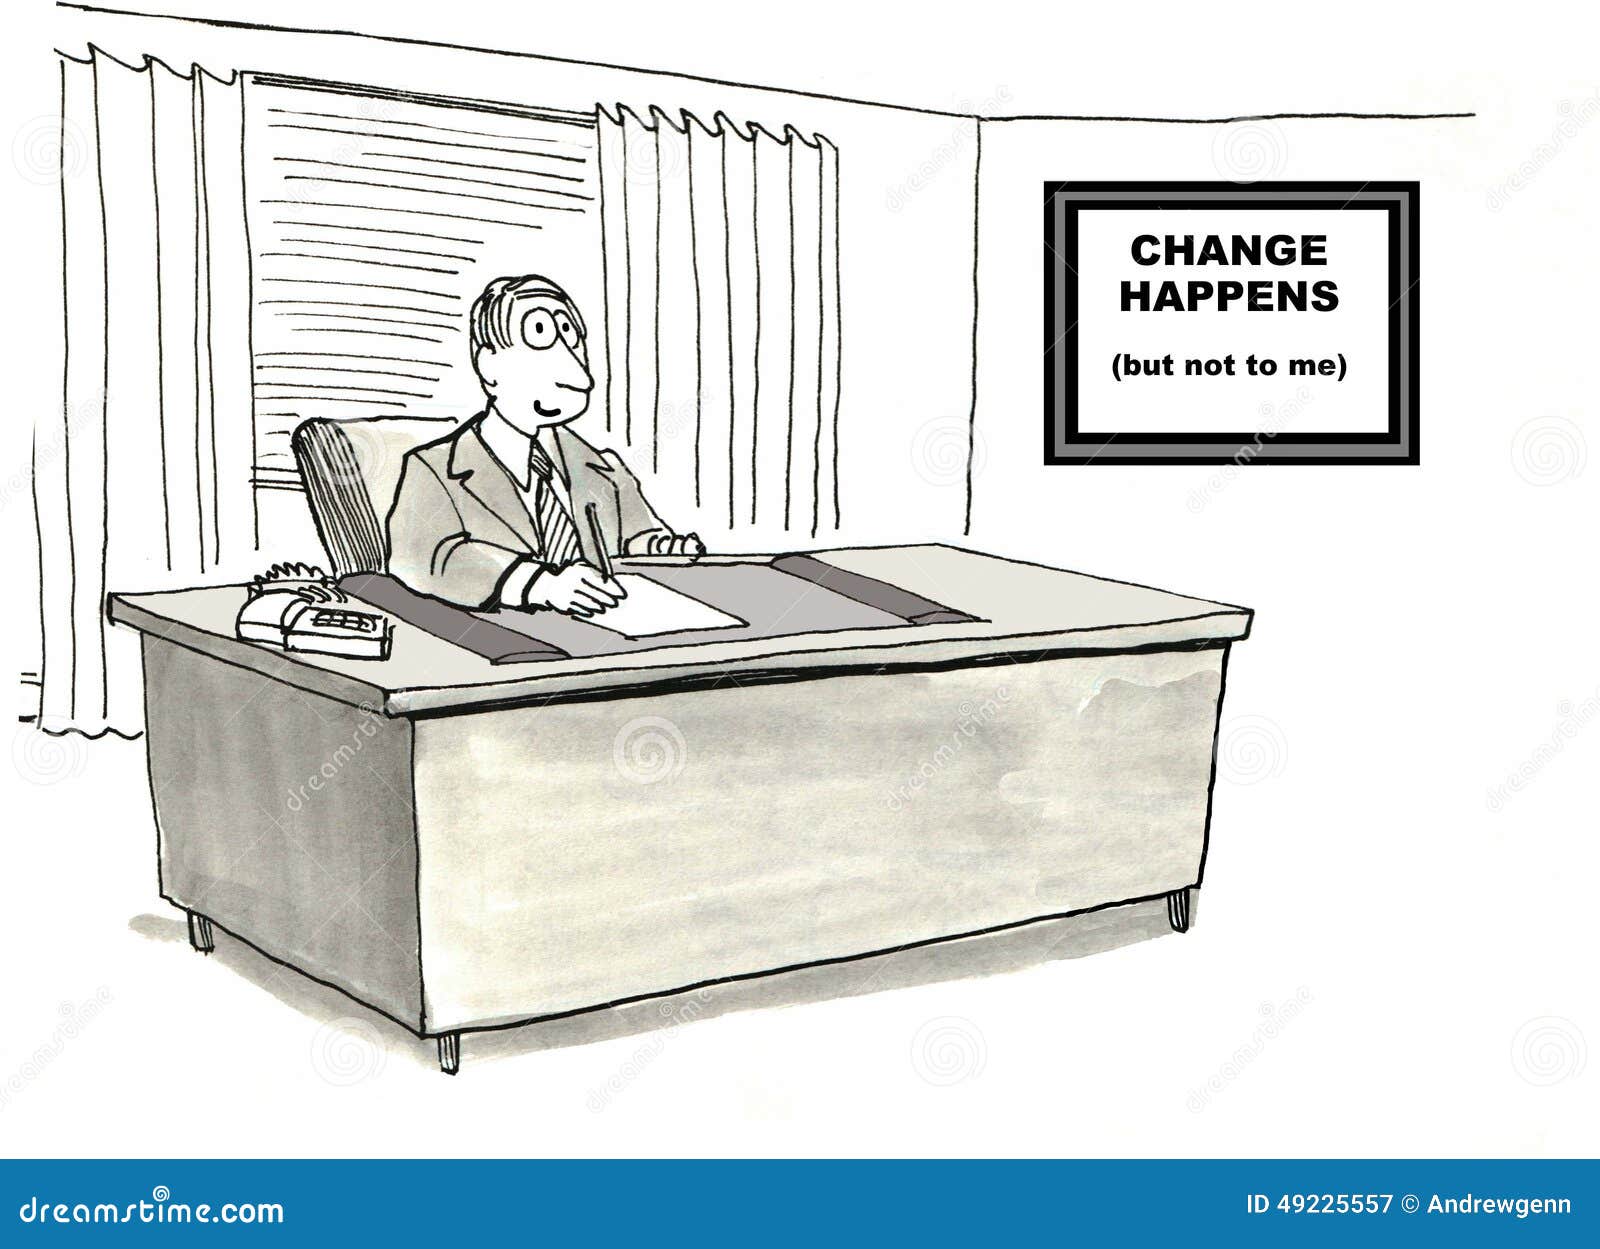 Change Management Cartoons Stock Illustrations – 73 Change Management  Cartoons Stock Illustrations, Vectors & Clipart - Dreamstime